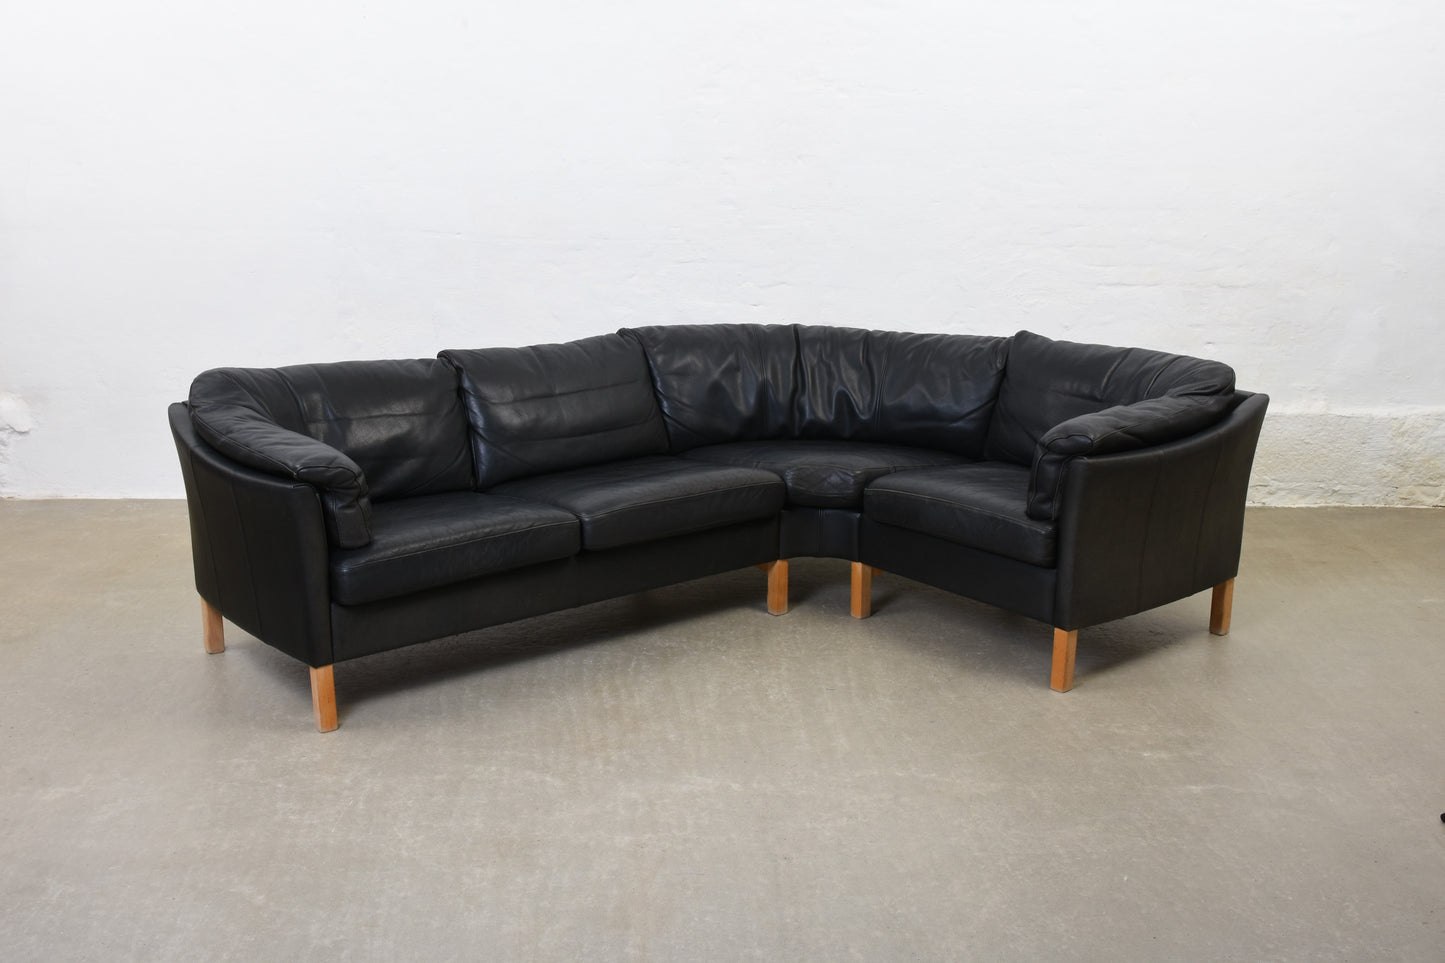 1980s Danish leather corner sofa